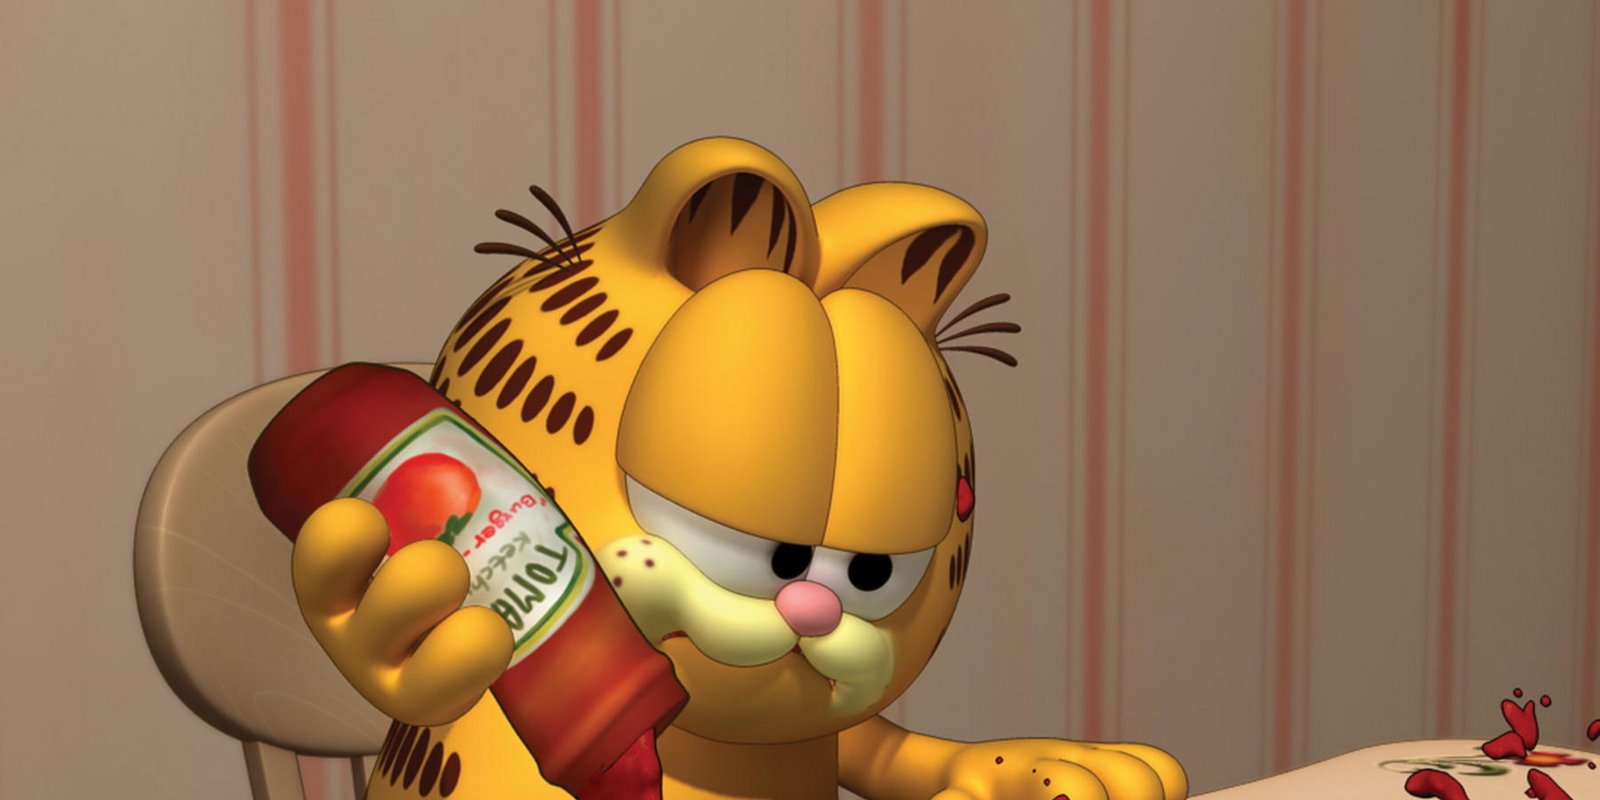 Garfield - Fett im Leben